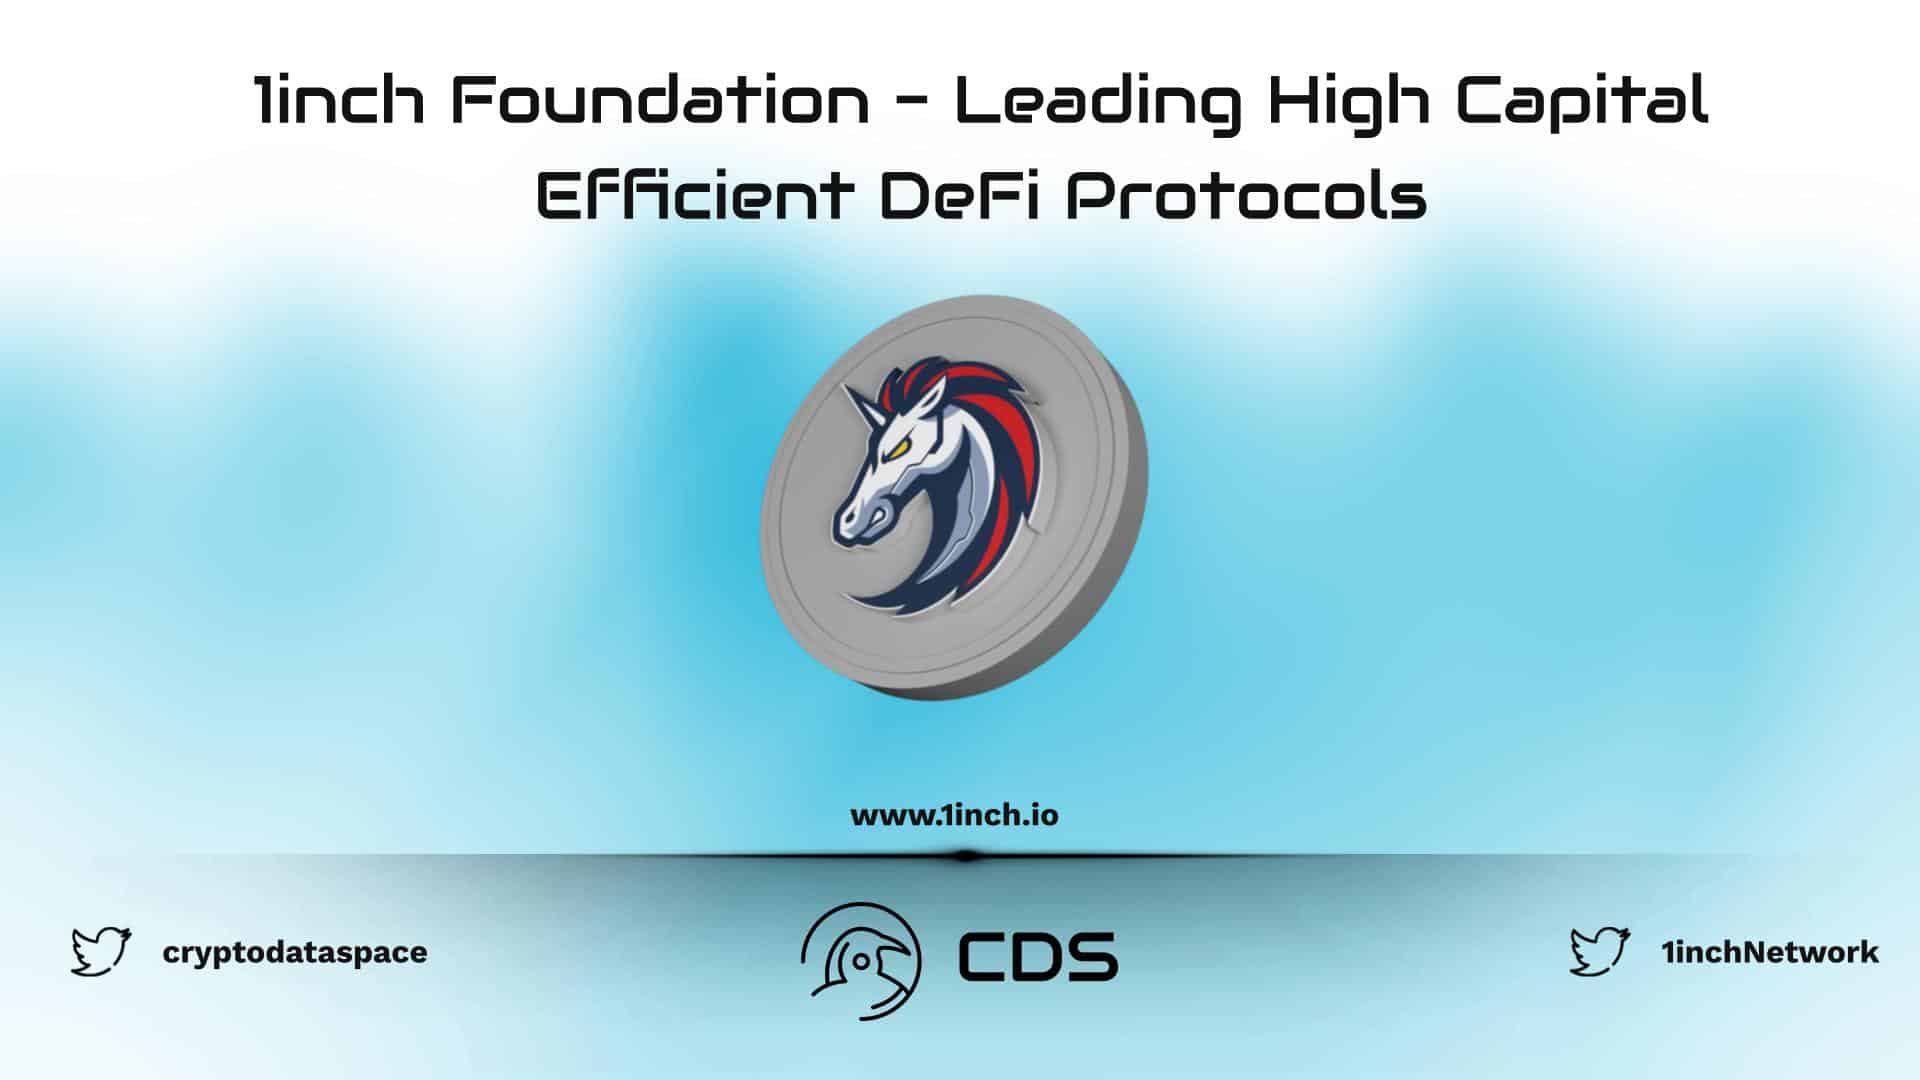 1inch Foundation - Leading High Capital Efficient DeFi Protocols